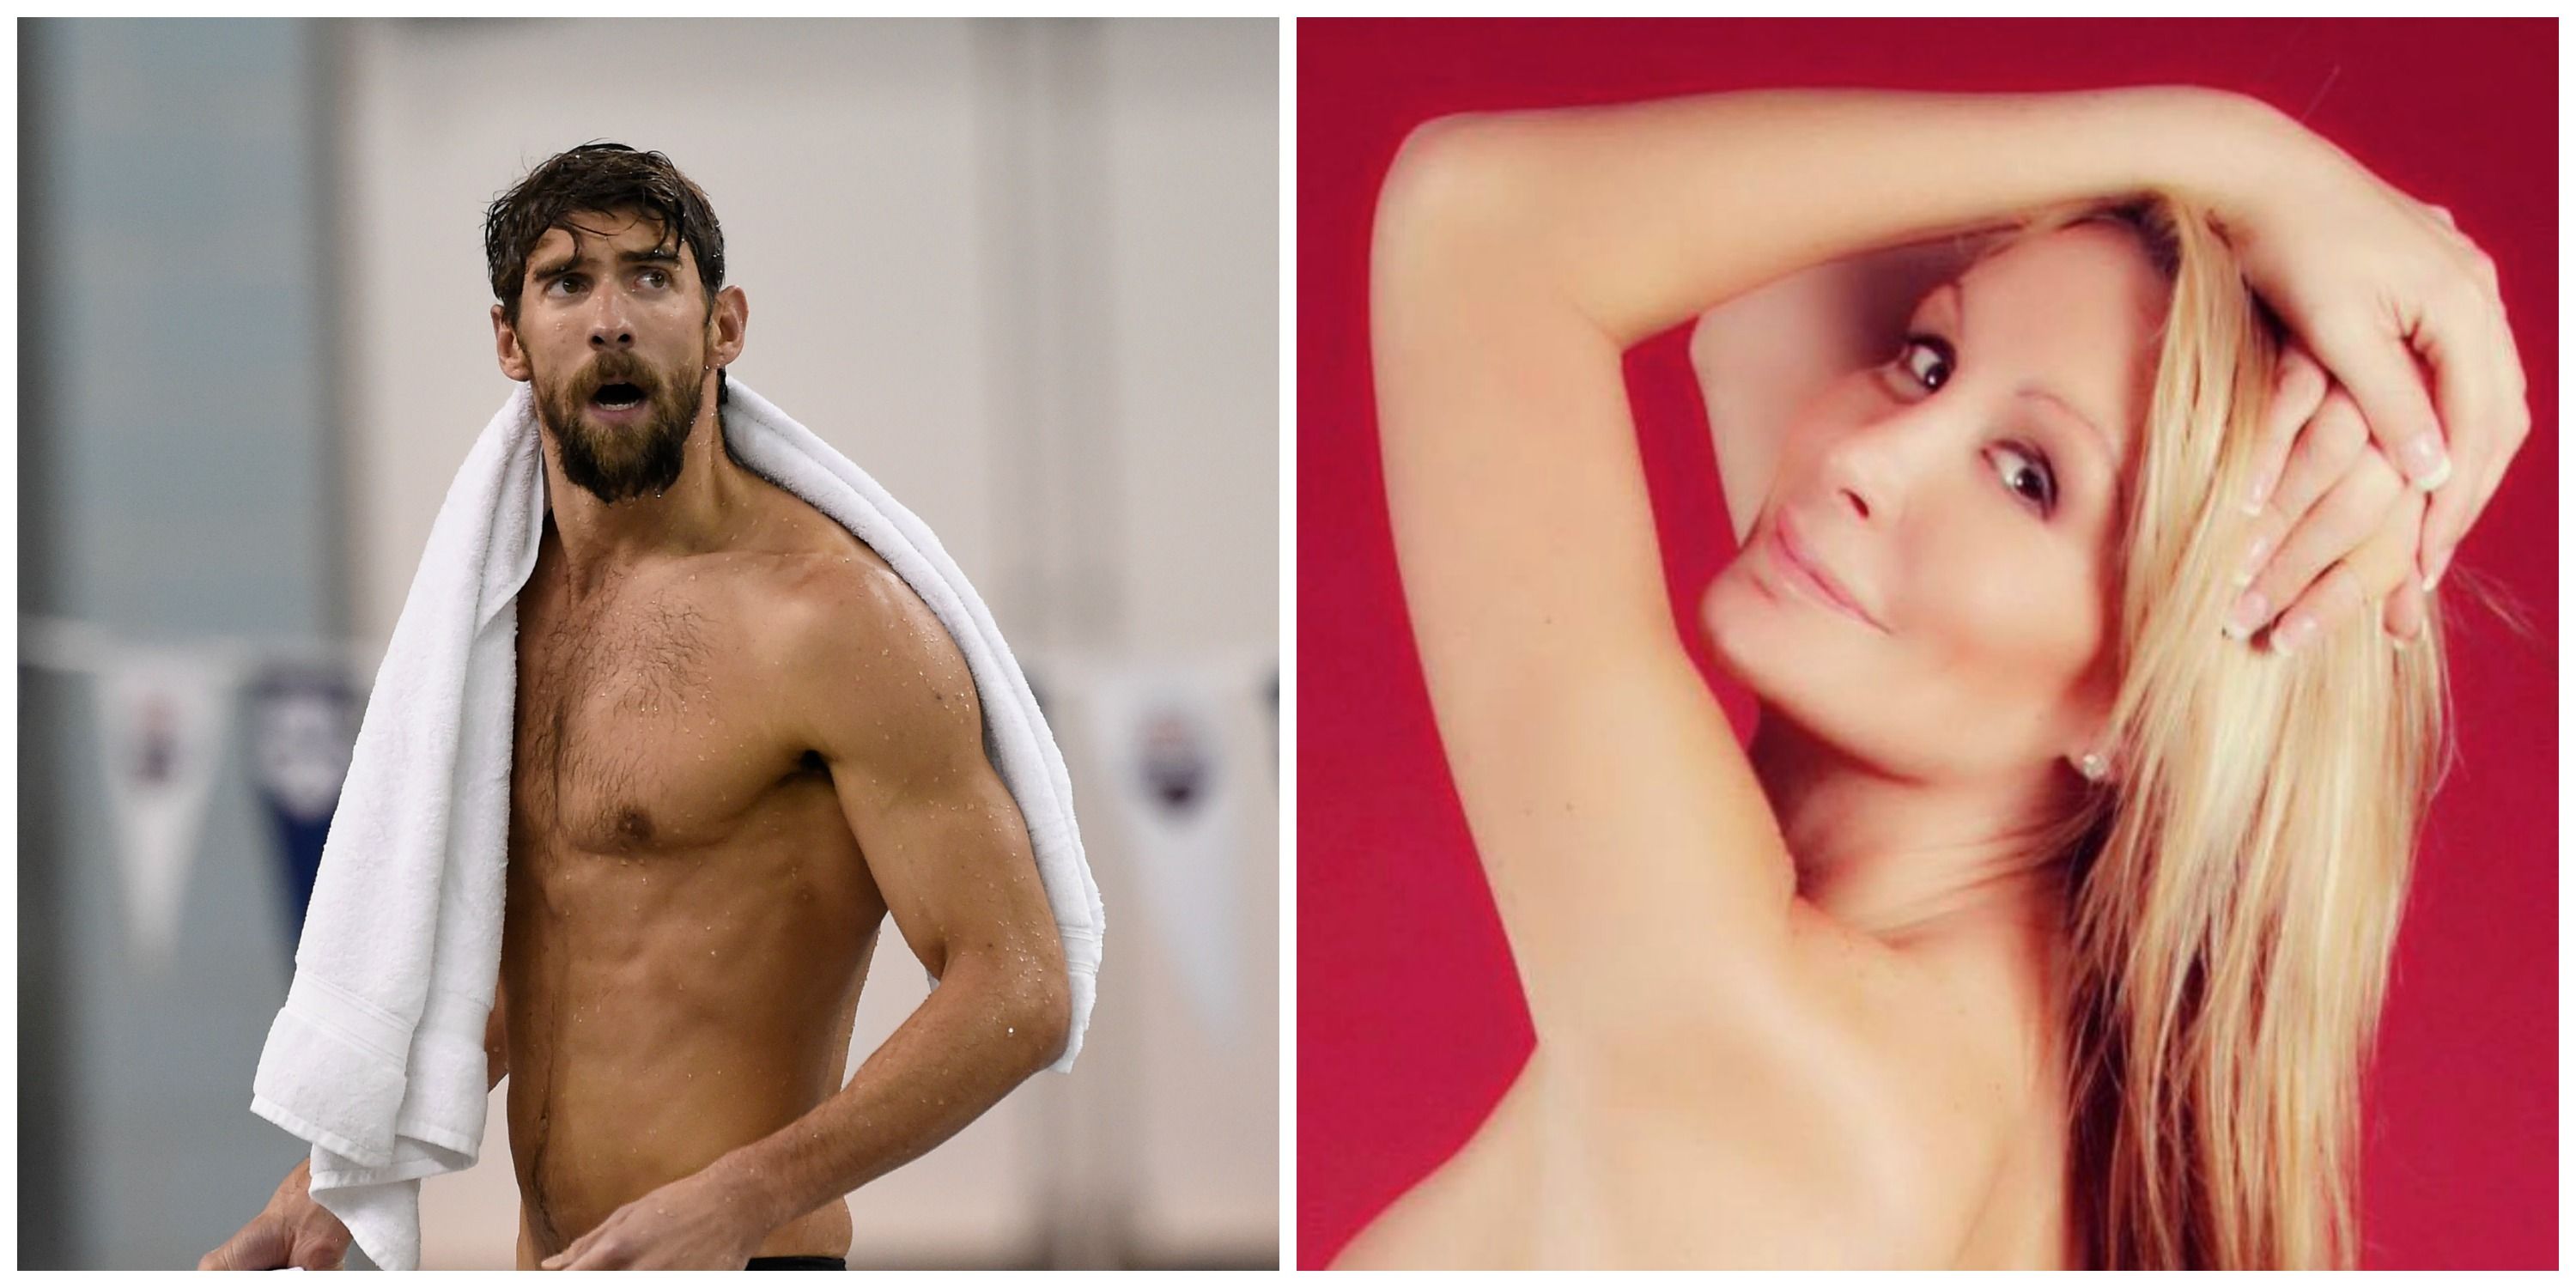 Michael Phelps transgender ex-girlfriend has labelled him worse than Charlie Sheen photo